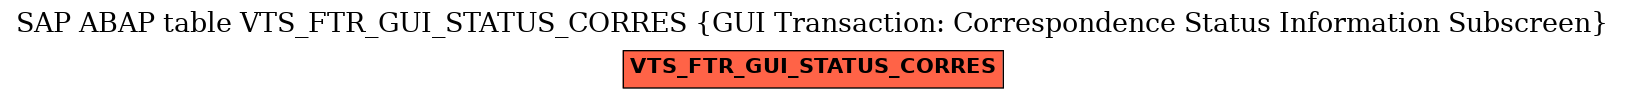 E-R Diagram for table VTS_FTR_GUI_STATUS_CORRES (GUI Transaction: Correspondence Status Information Subscreen)